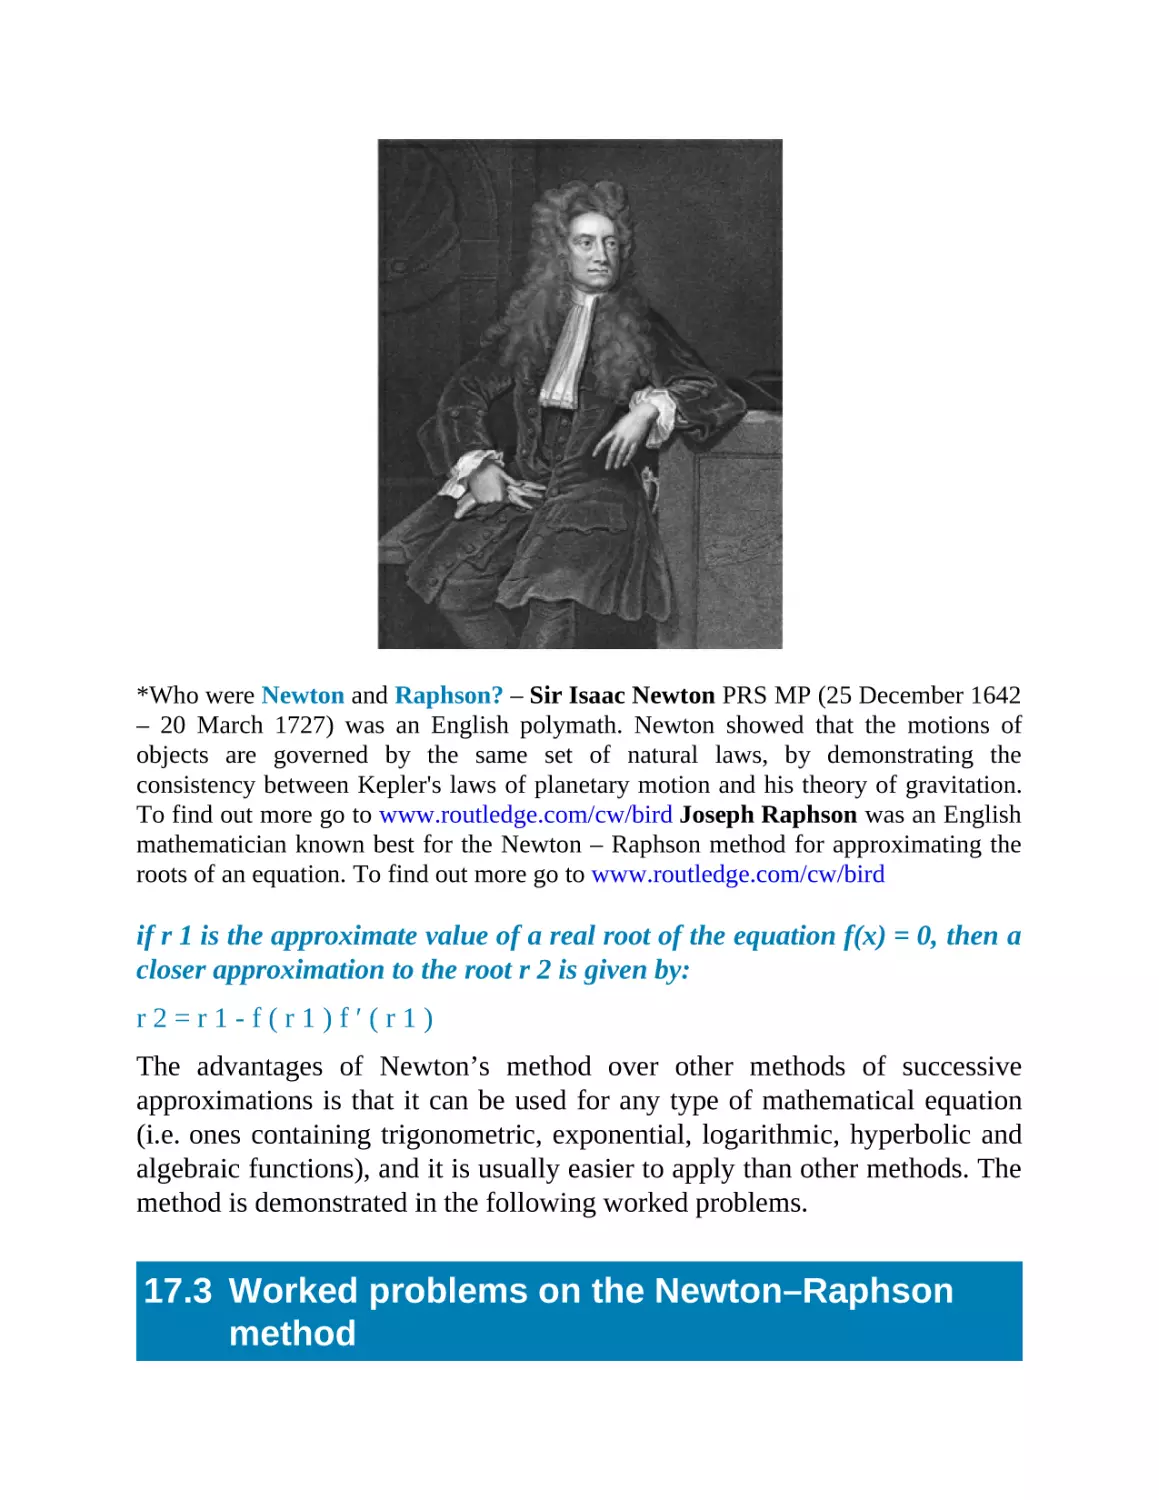 17.3 Worked problems on the Newton–Raphson method